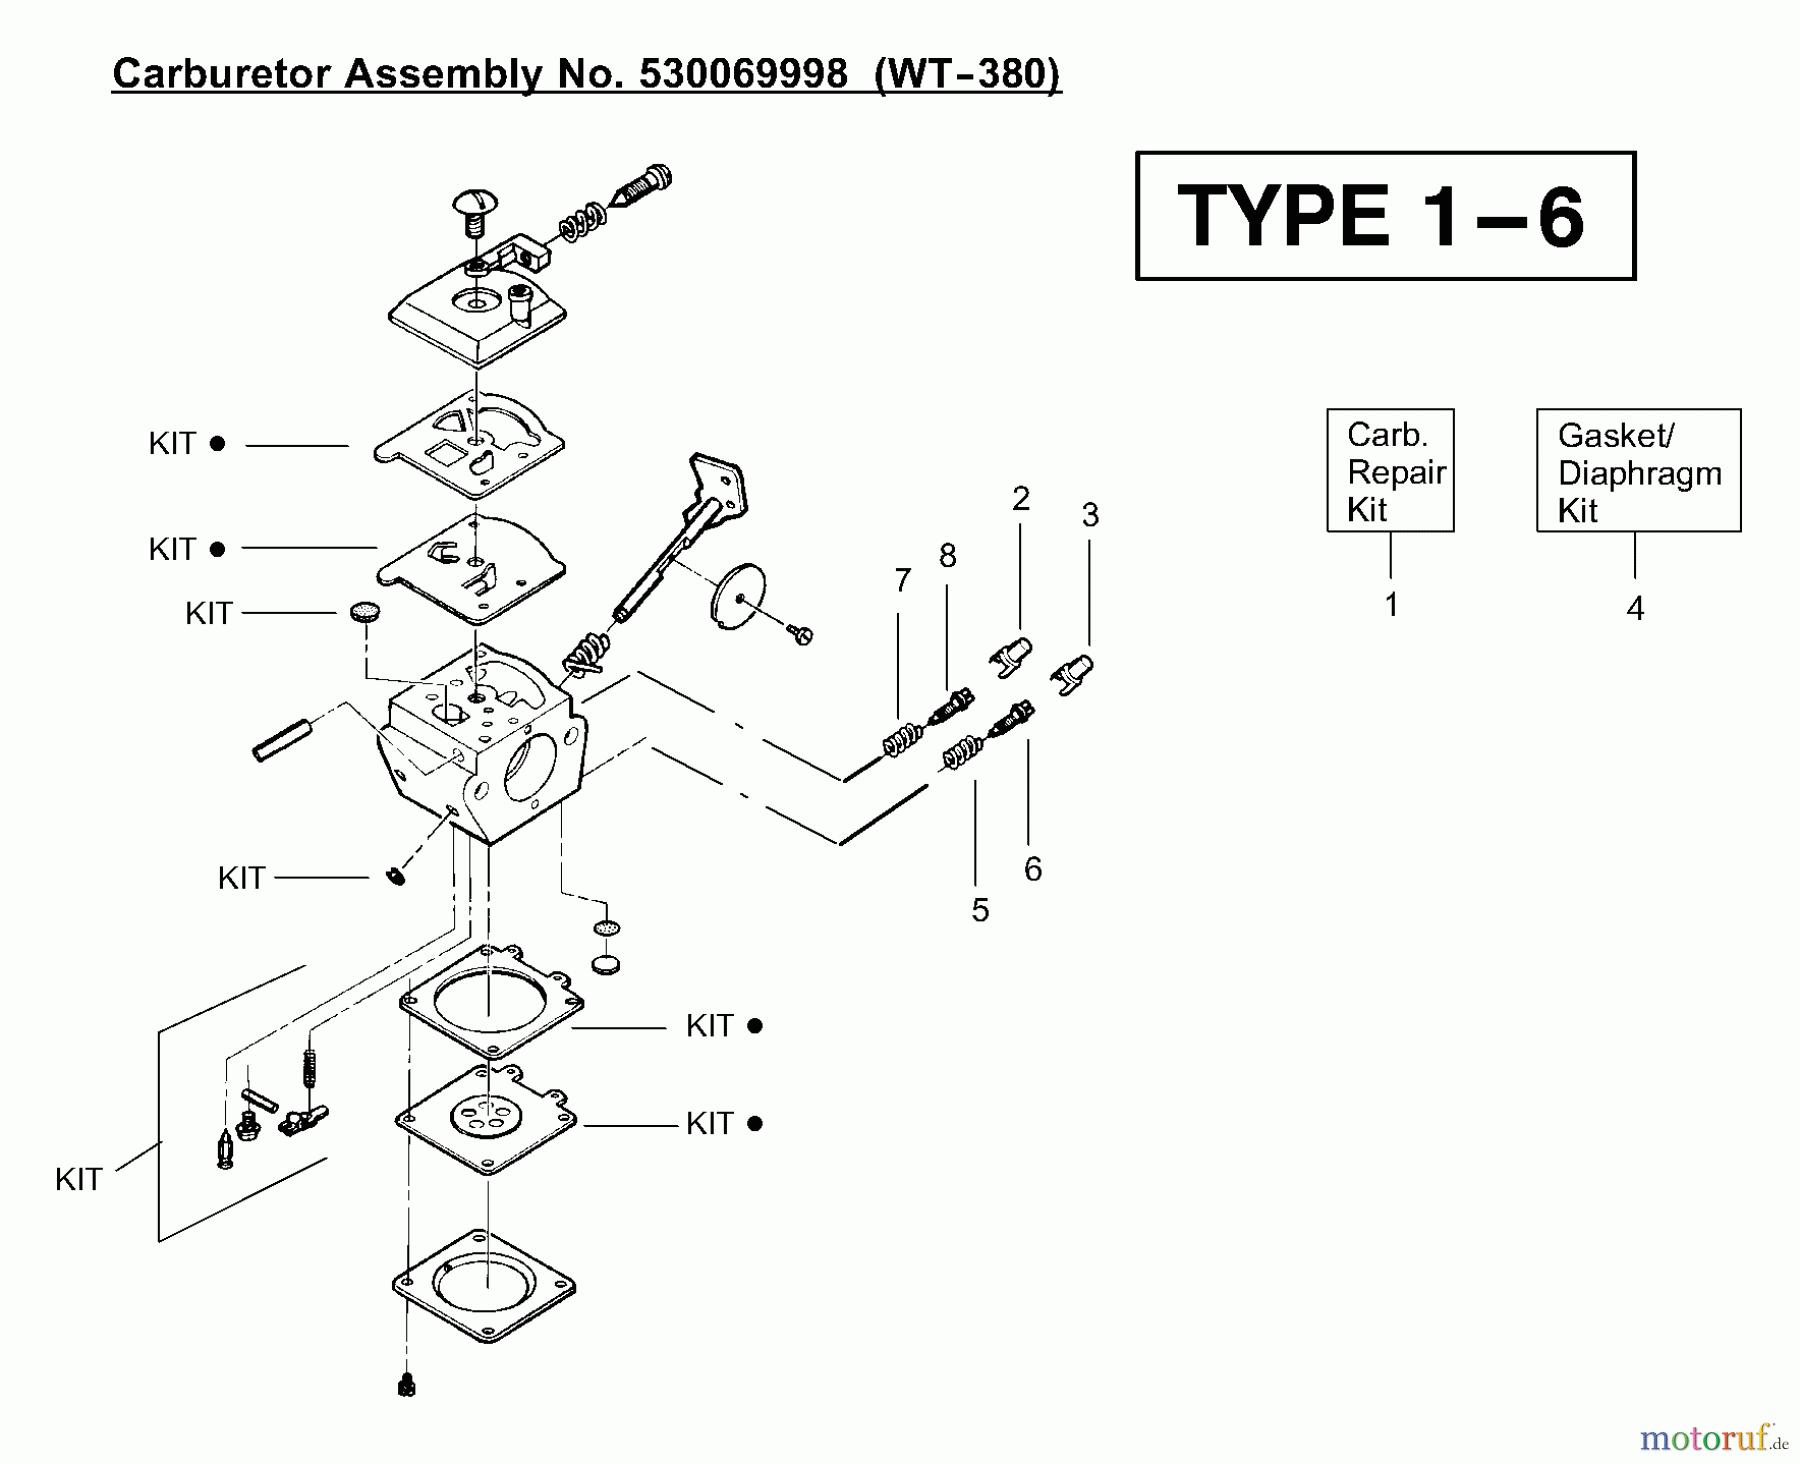  Poulan / Weed Eater Motorsensen, Trimmer BC2400 (Type 1) - Weed Eater String Trimmer Carburetor Assembly (WT380) 530069998